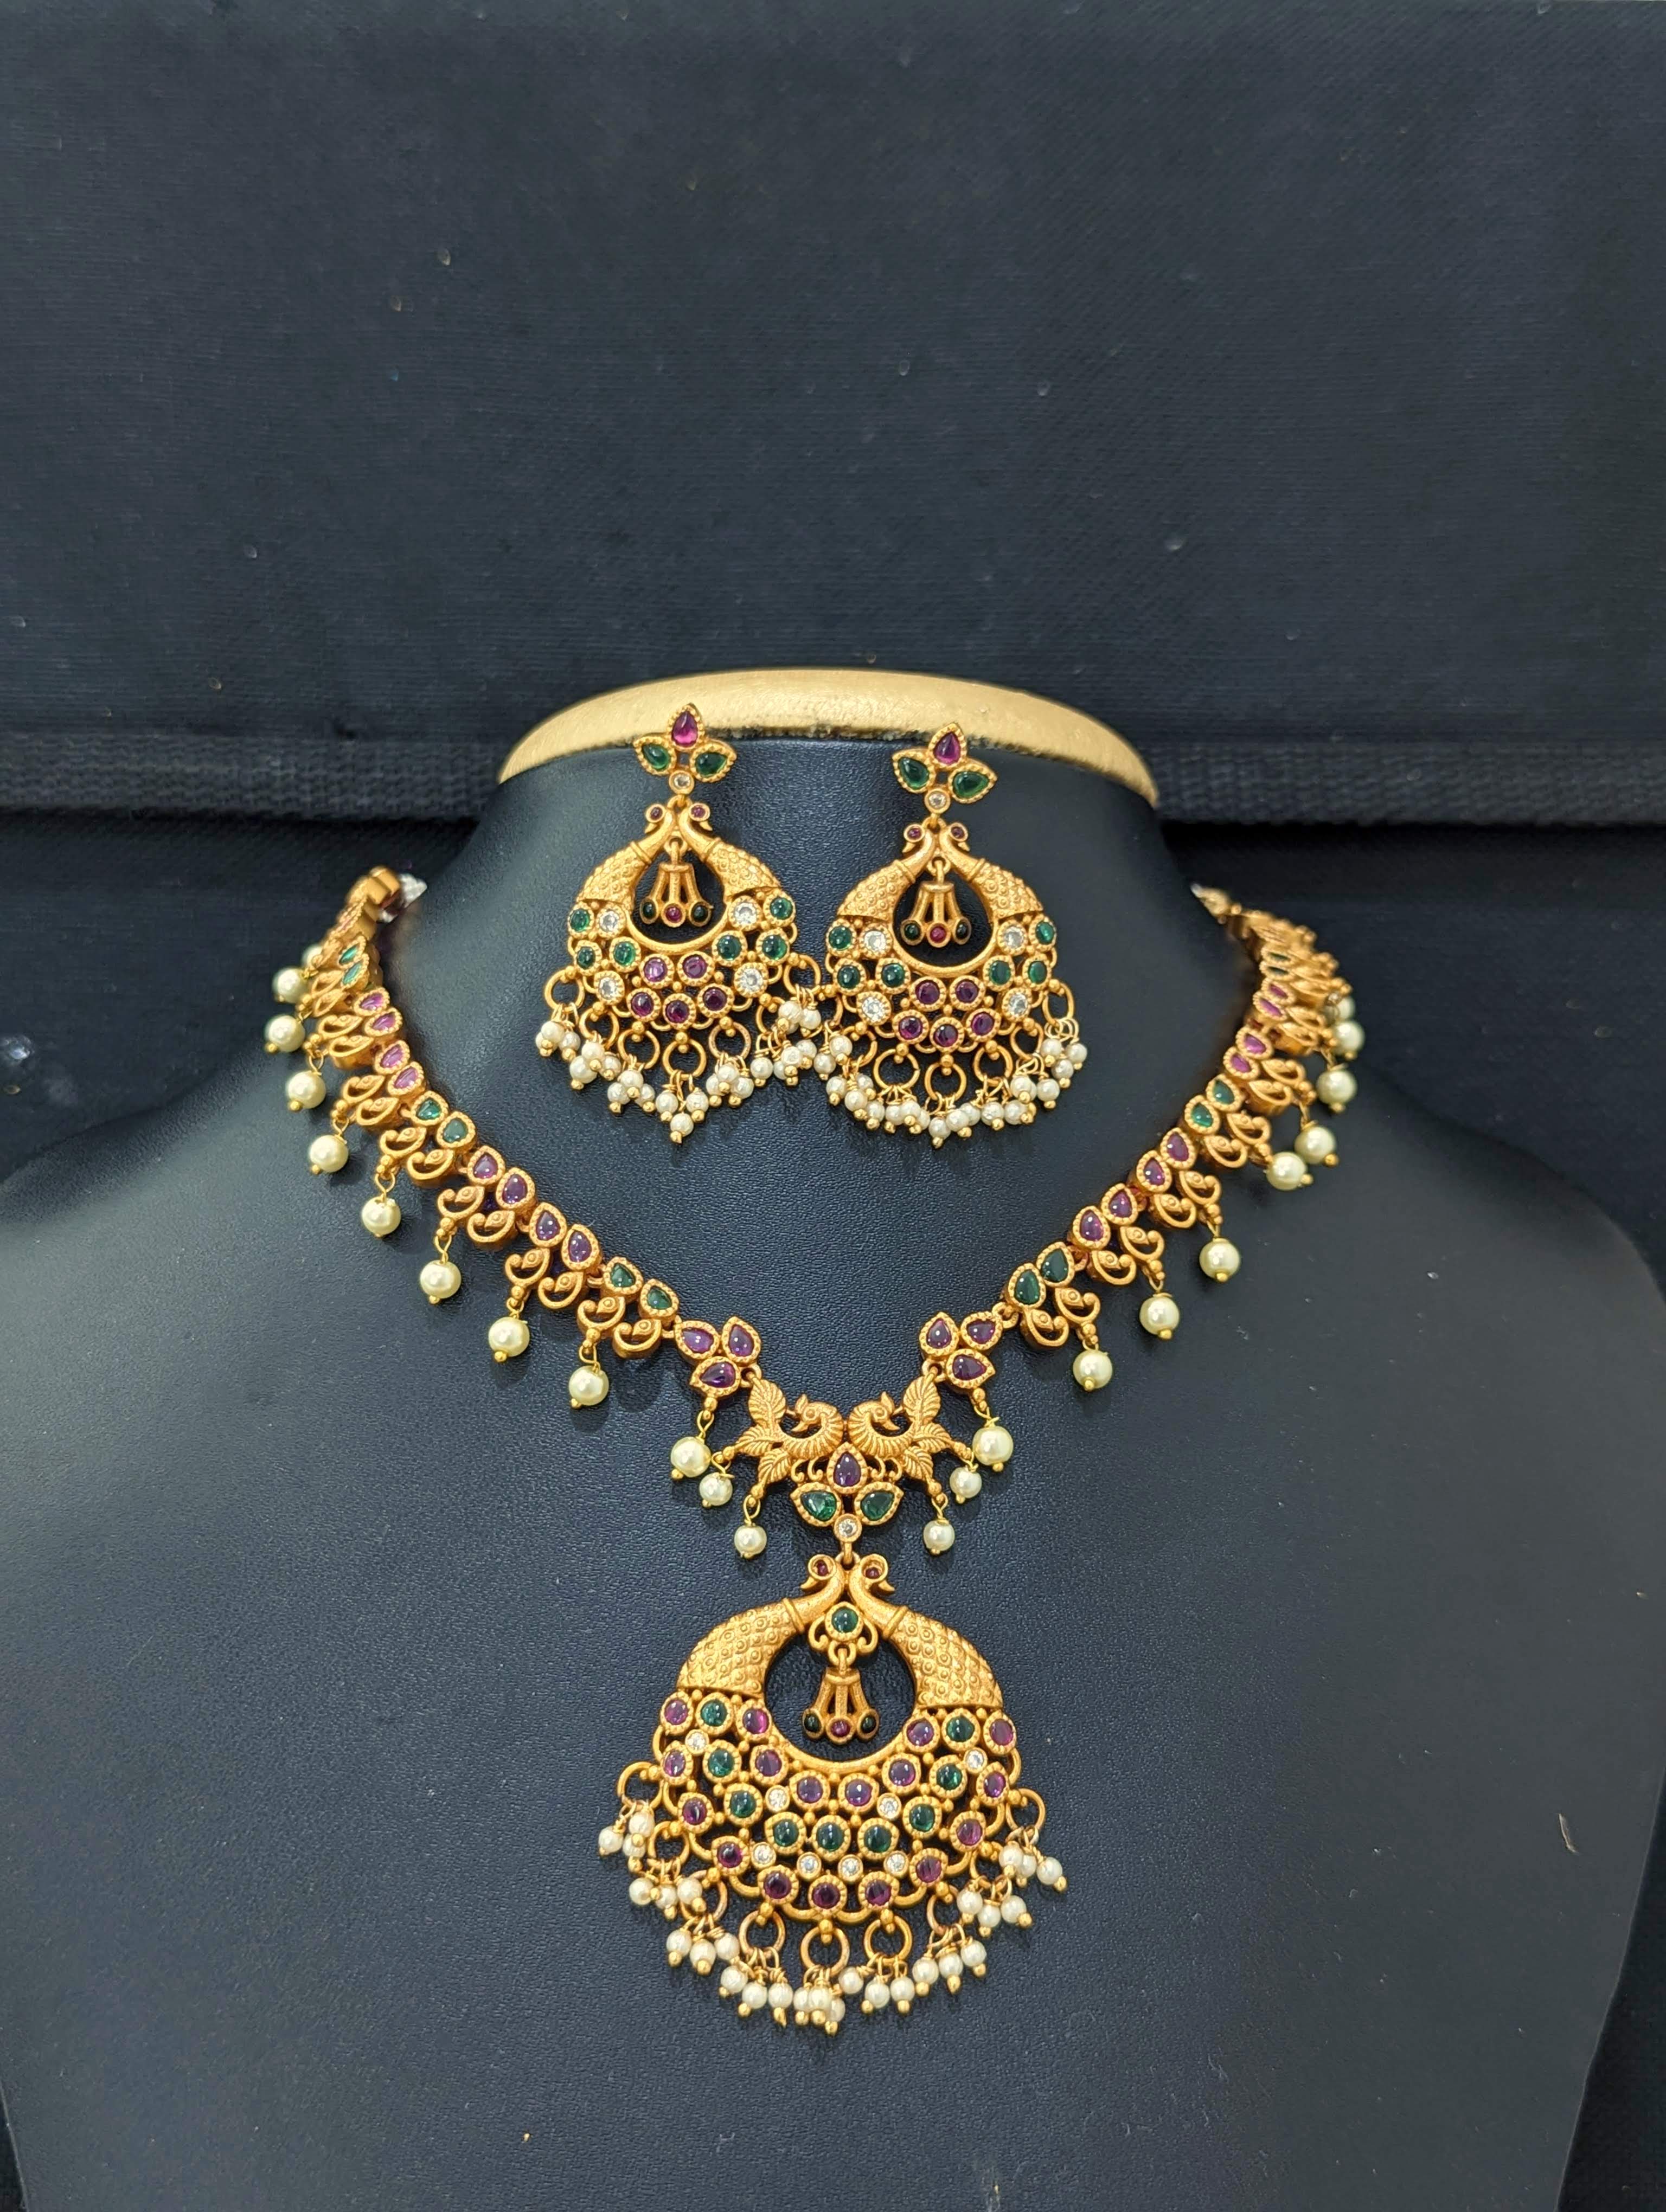 Pendant Necklace Set with Orange Crystals - Officewear Jewellery - Zen Pendant  Set by Blingvine